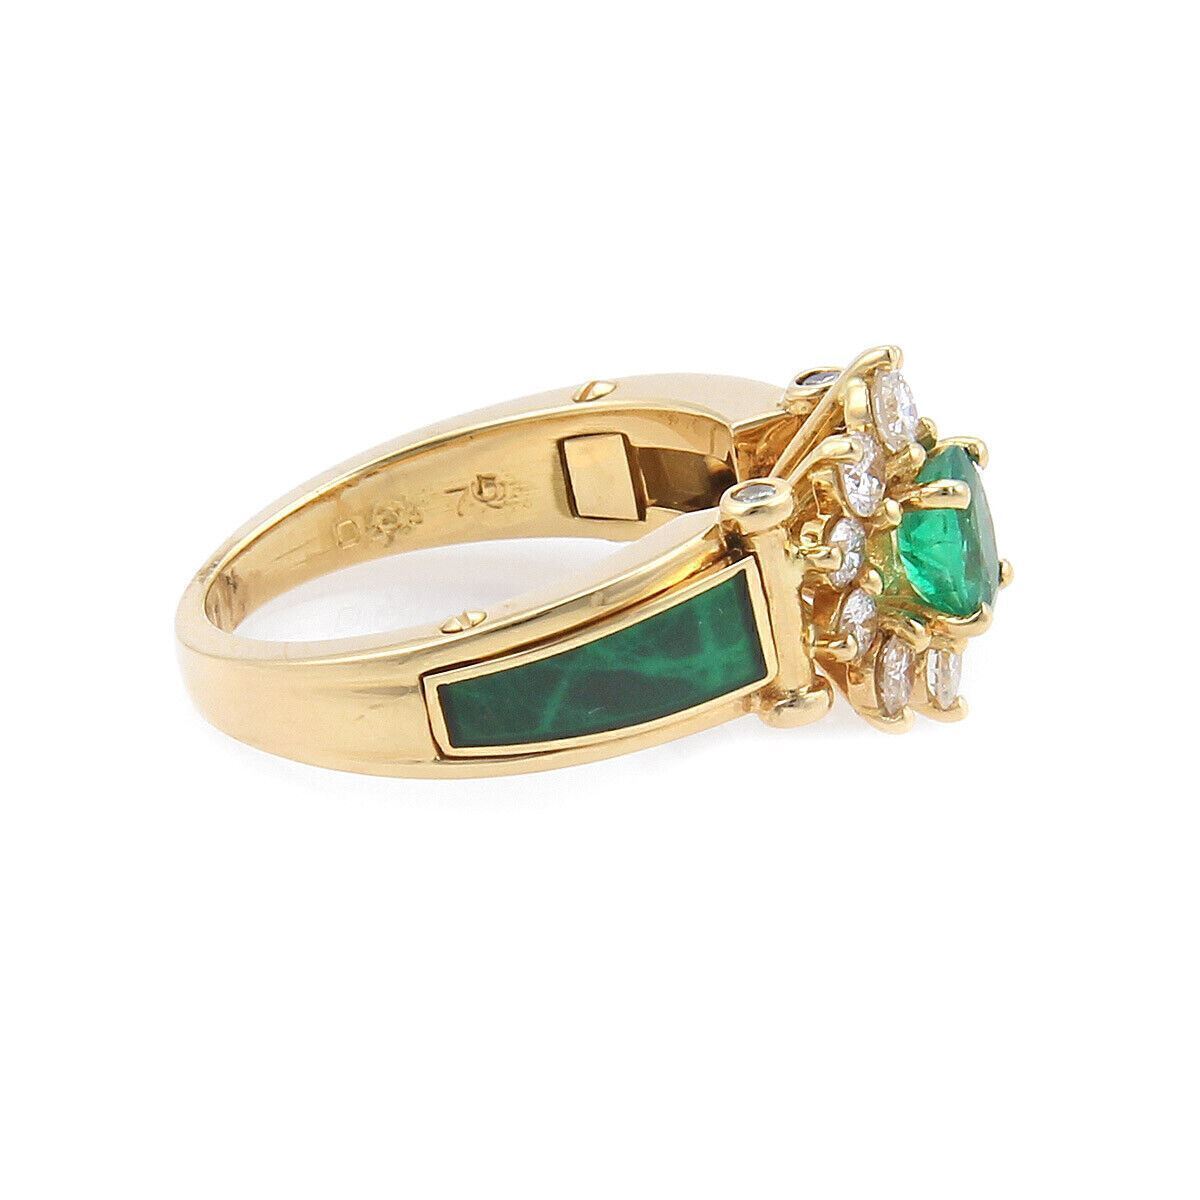 Korloff Diamonds & Emerald Enamel 18k Gold Cocktail Ring